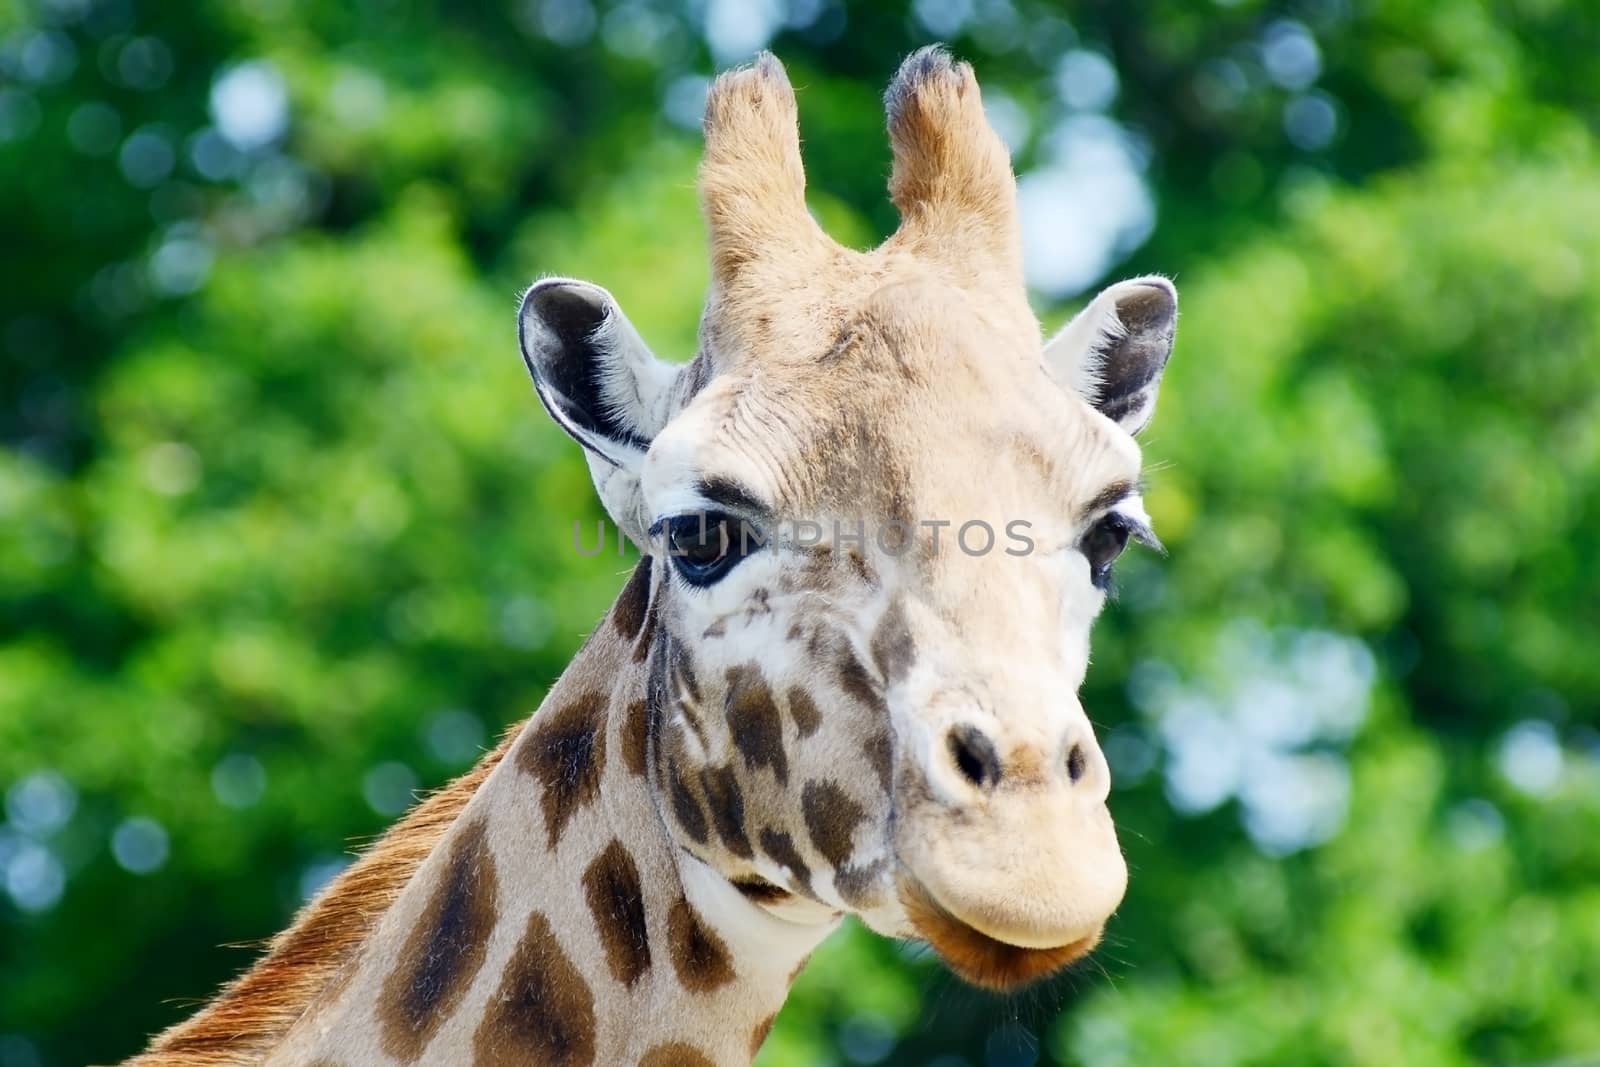 Giraffe head closeup showing horns and pattern on fur